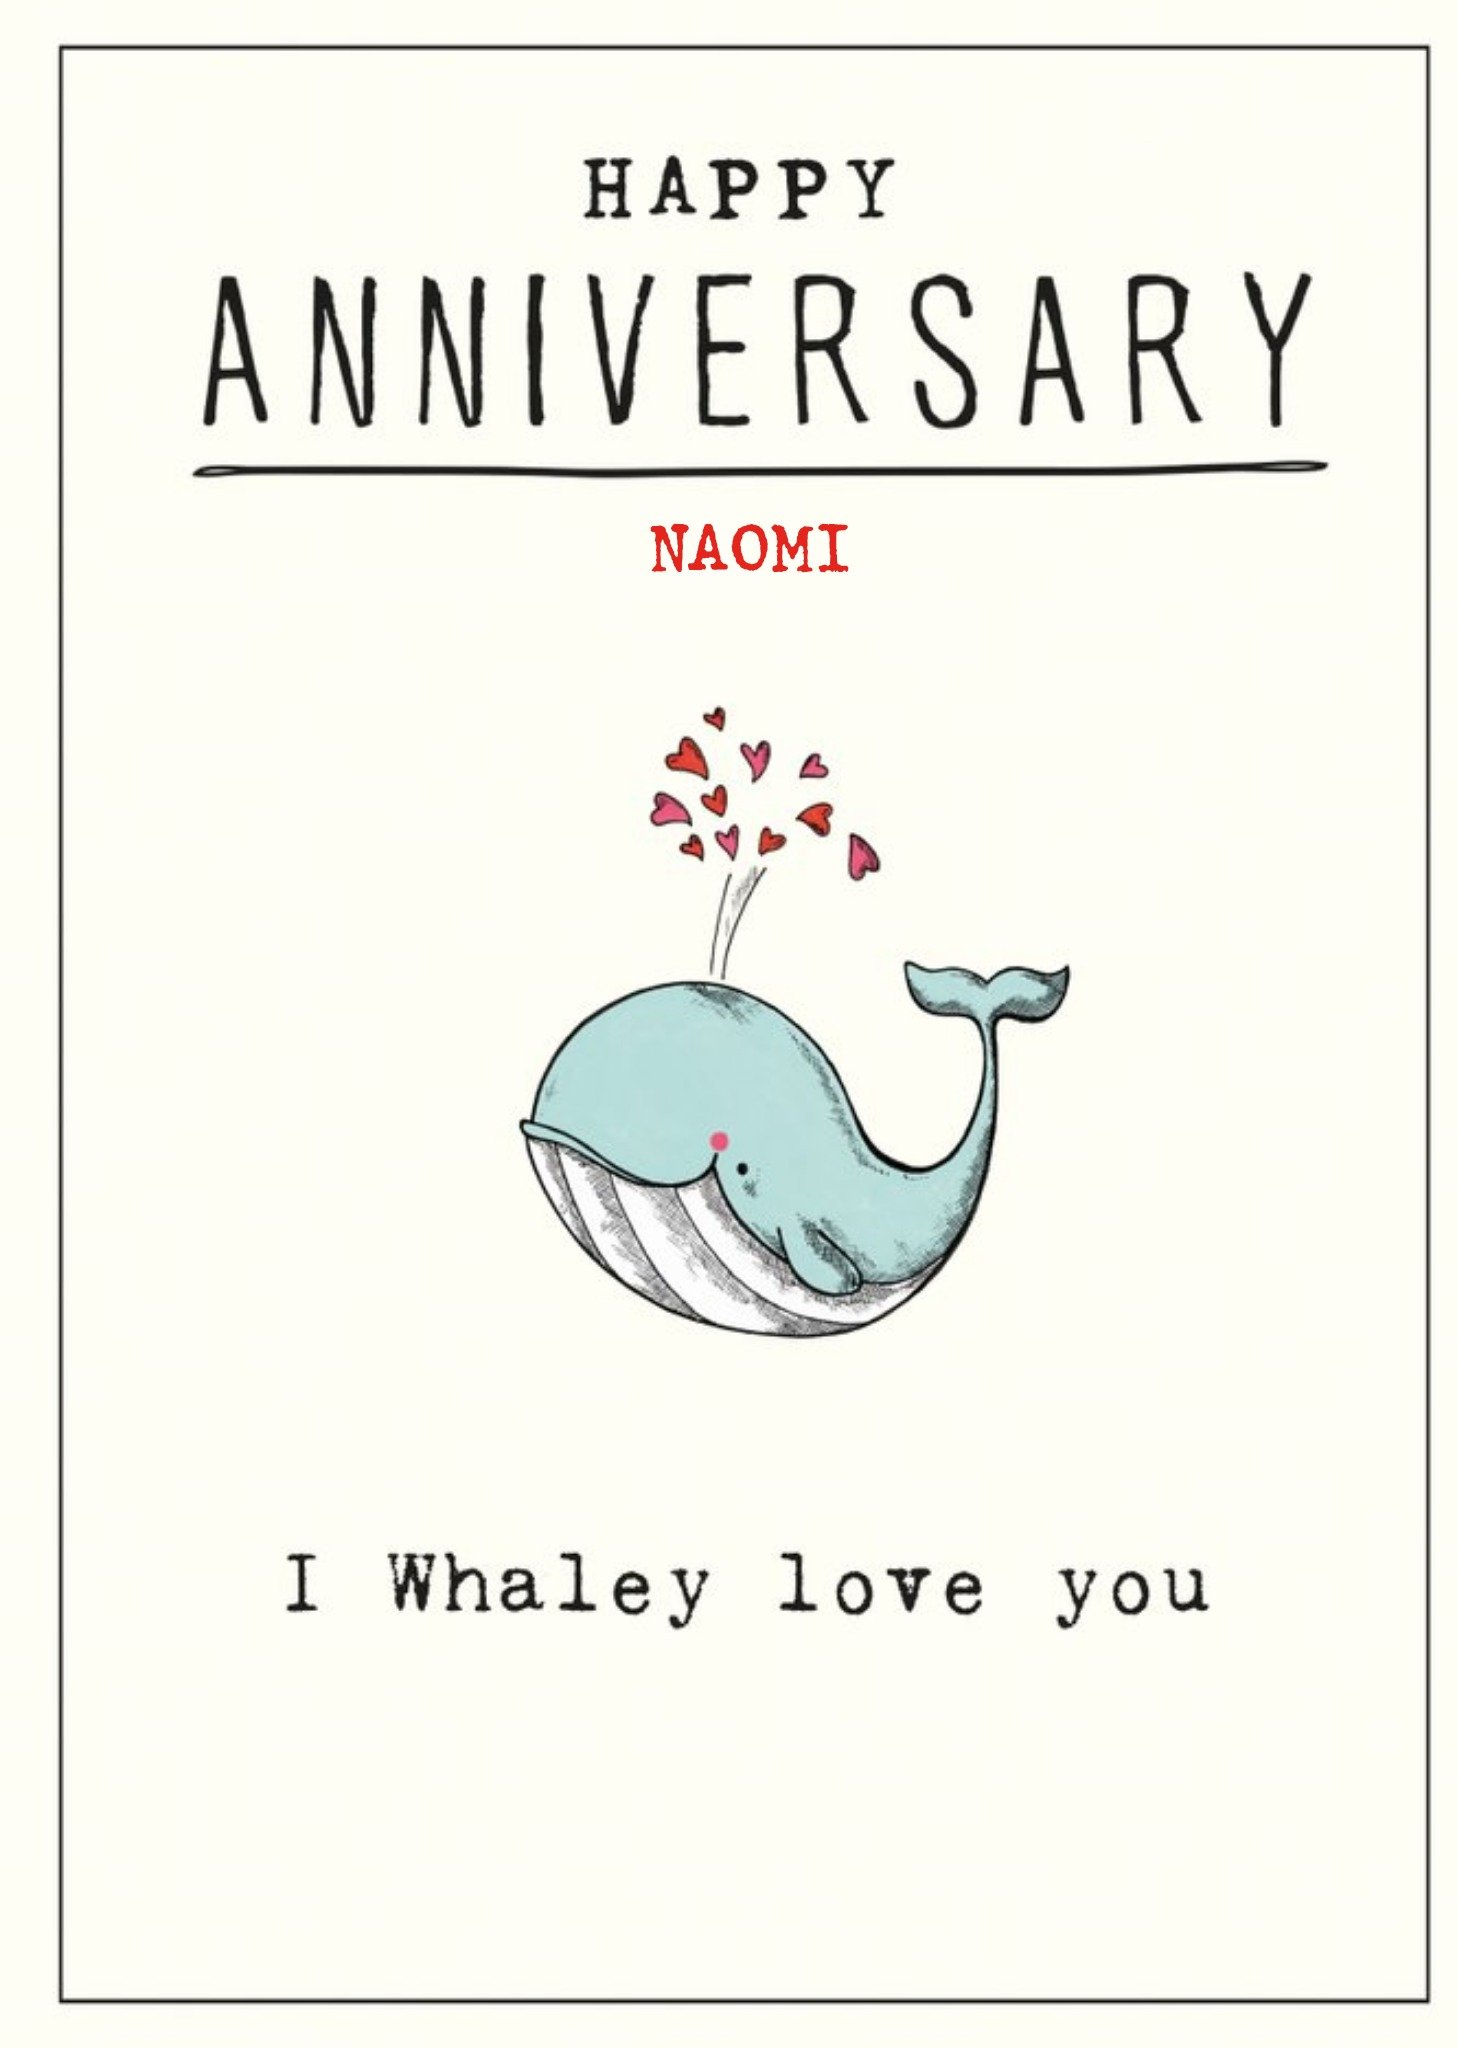 Moonpig Humorous Illustrative Love Hearts & Whale Anniversary Card, Large